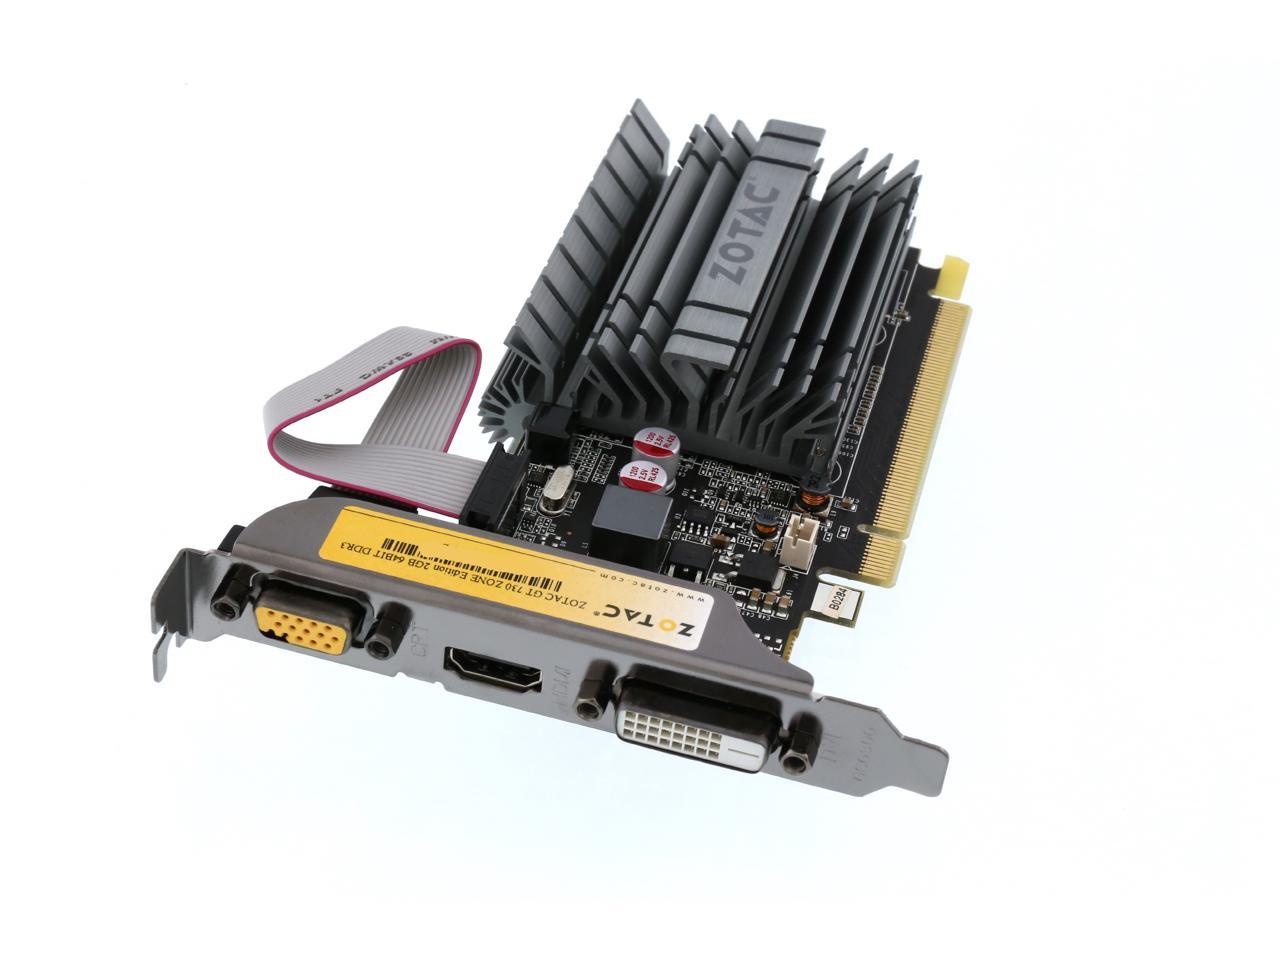 ZOTAC GeForce GT 730 Zone Edition 2GB DDR3 PCI Express HDMI DVI Graphics Card ZT-71113-20L